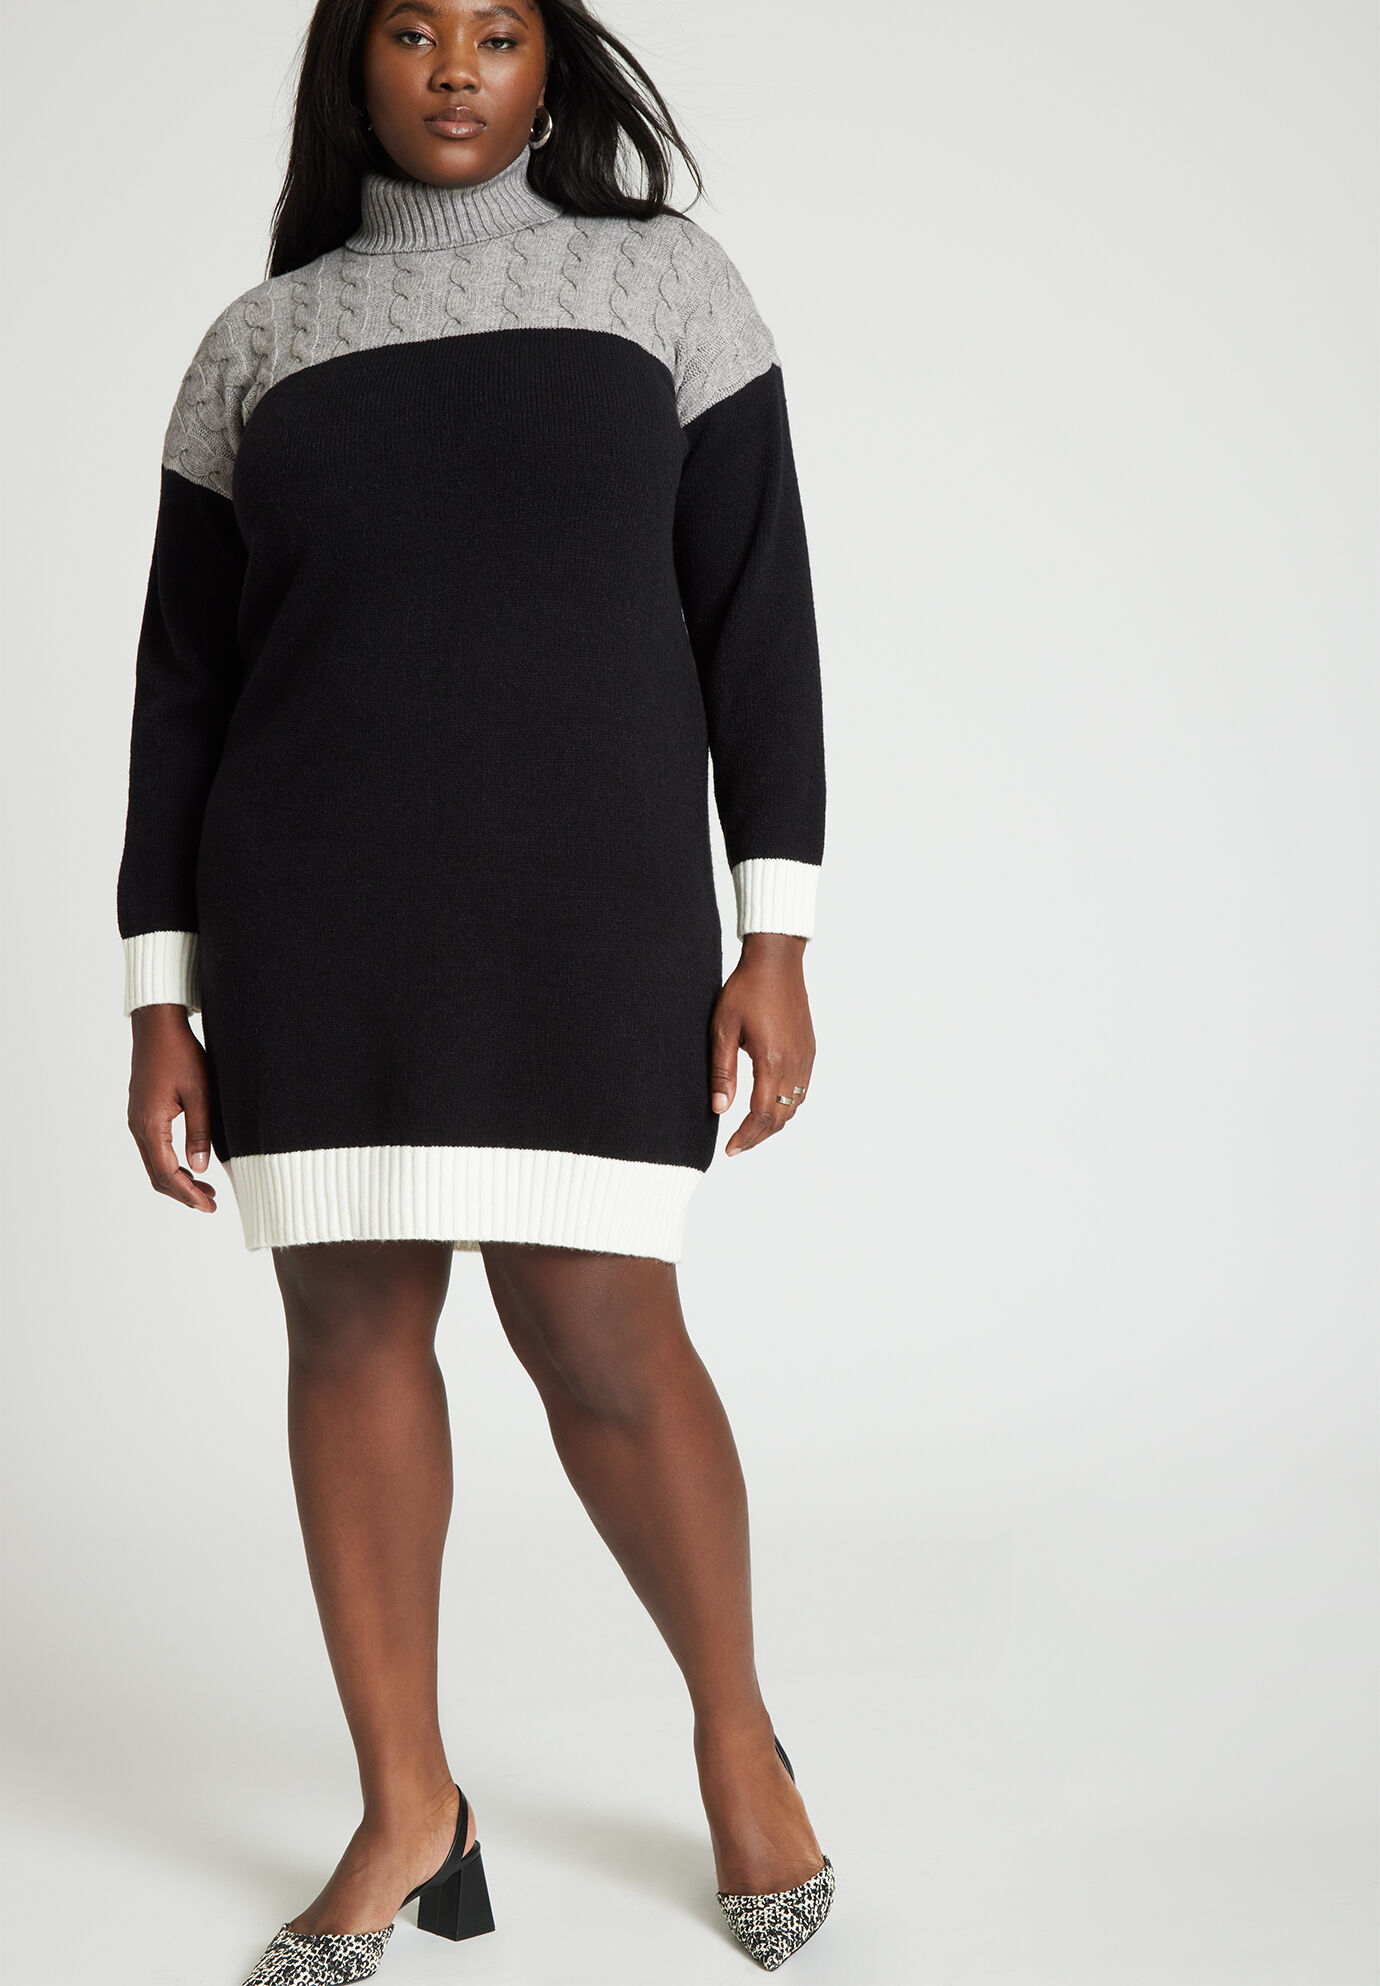 Plus Size Colorblocking Short Sweater Collared Turtleneck Dropped Shoulder Dress